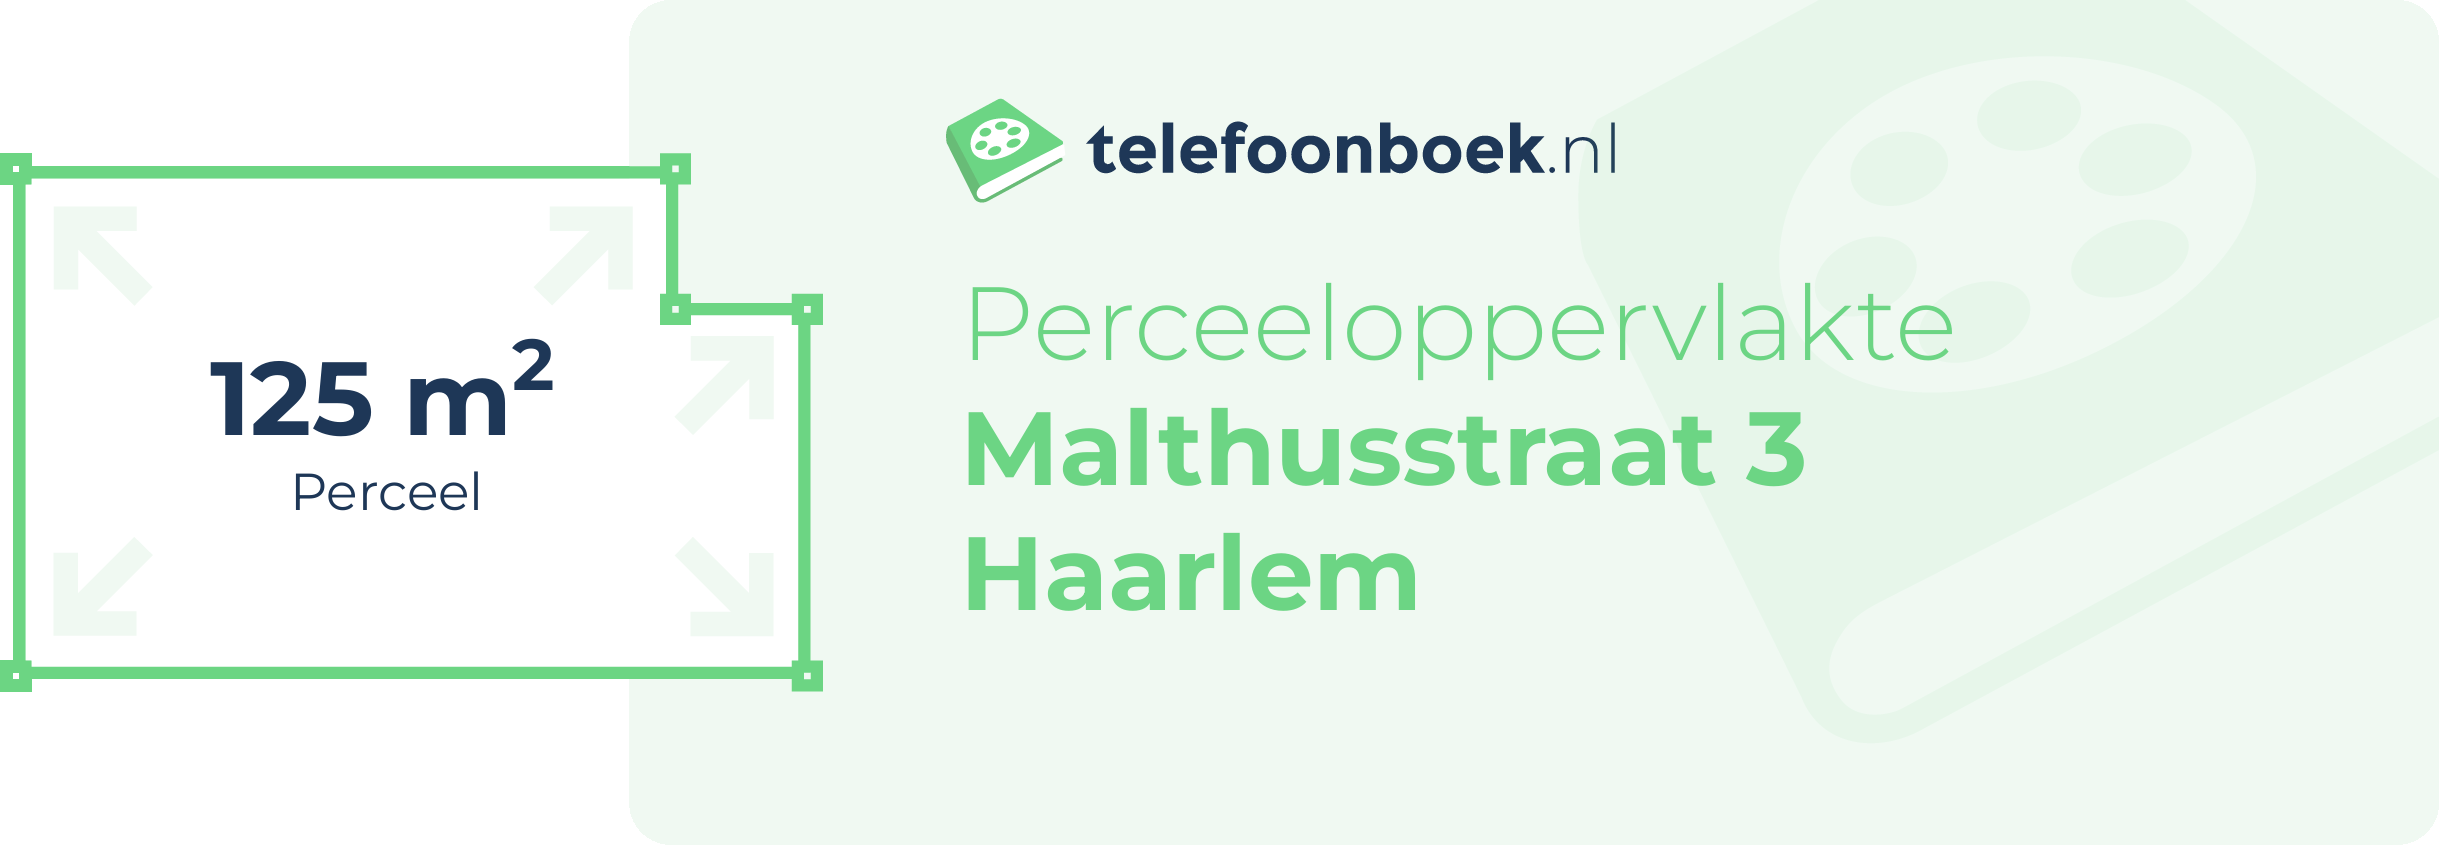 Perceeloppervlakte Malthusstraat 3 Haarlem